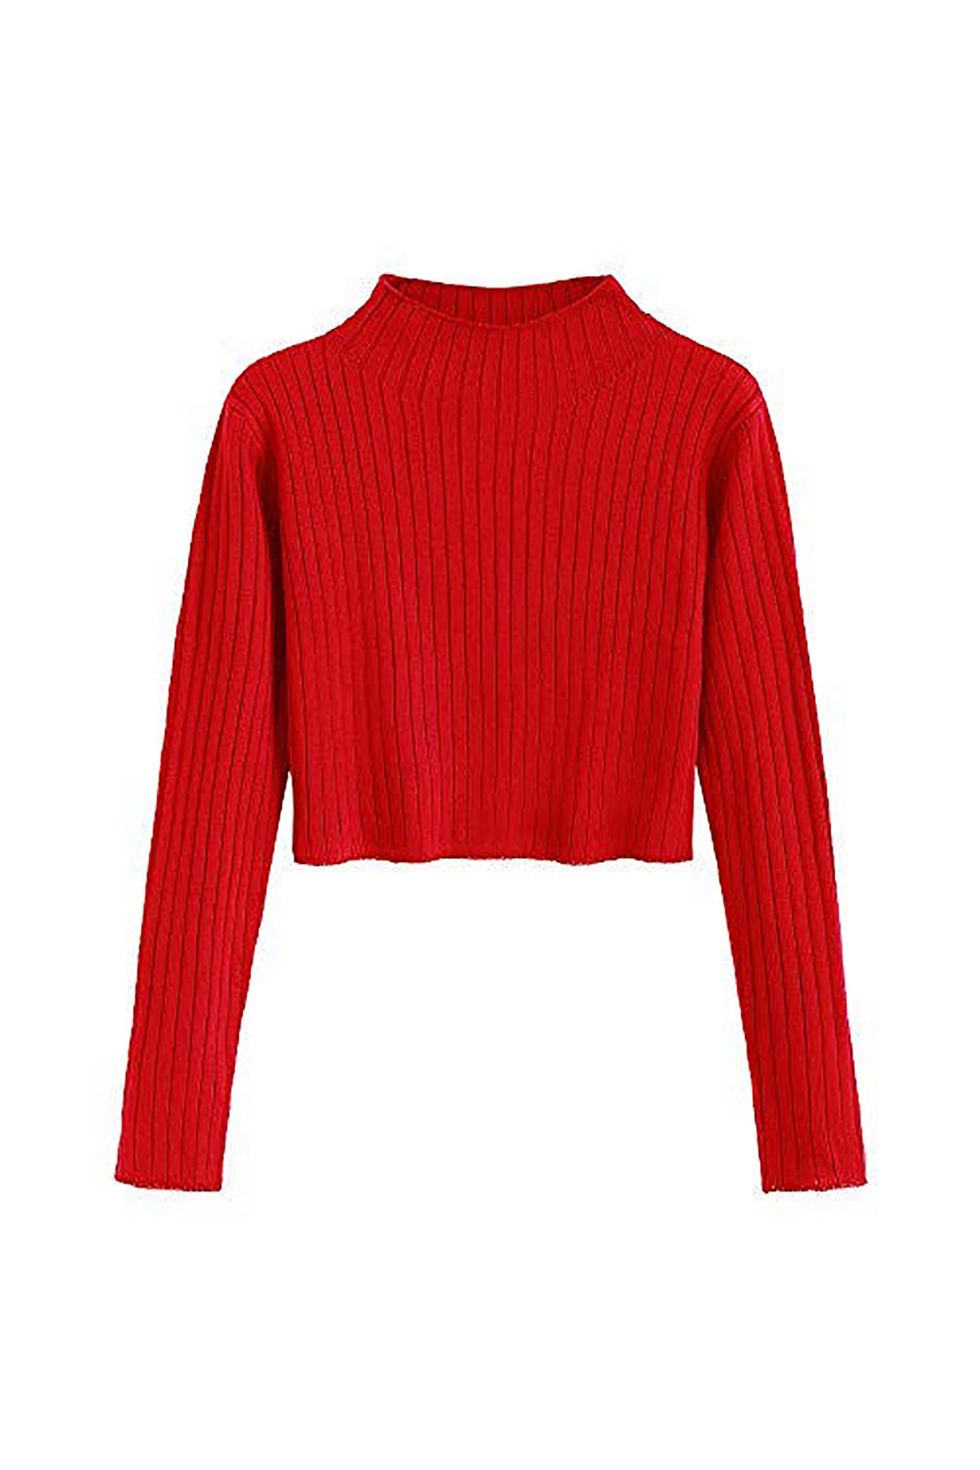 ZAFUL Knit Pullover Crop Sweater 